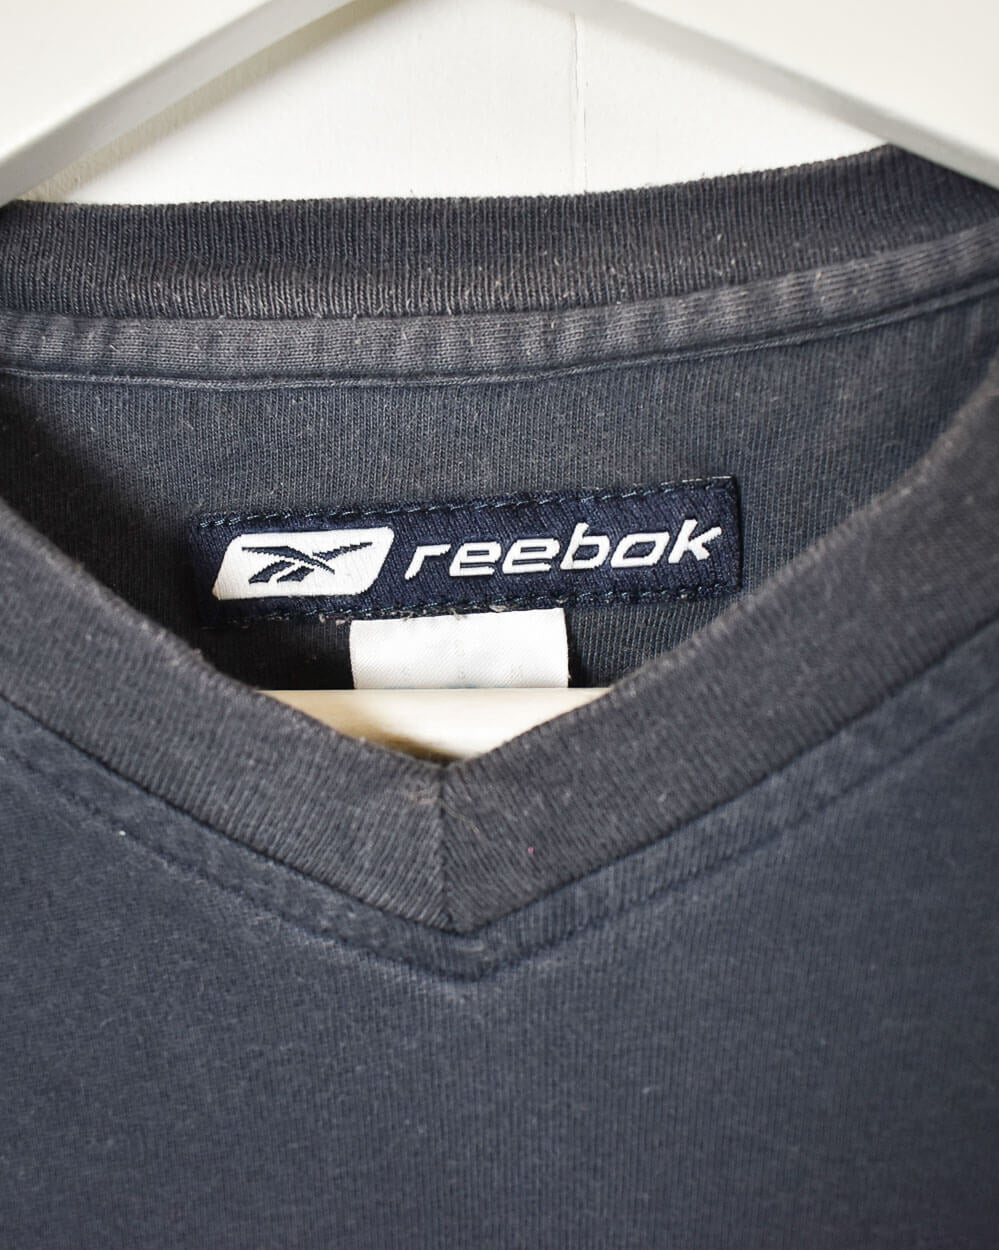 Navy Reebok T-Shirt - Small